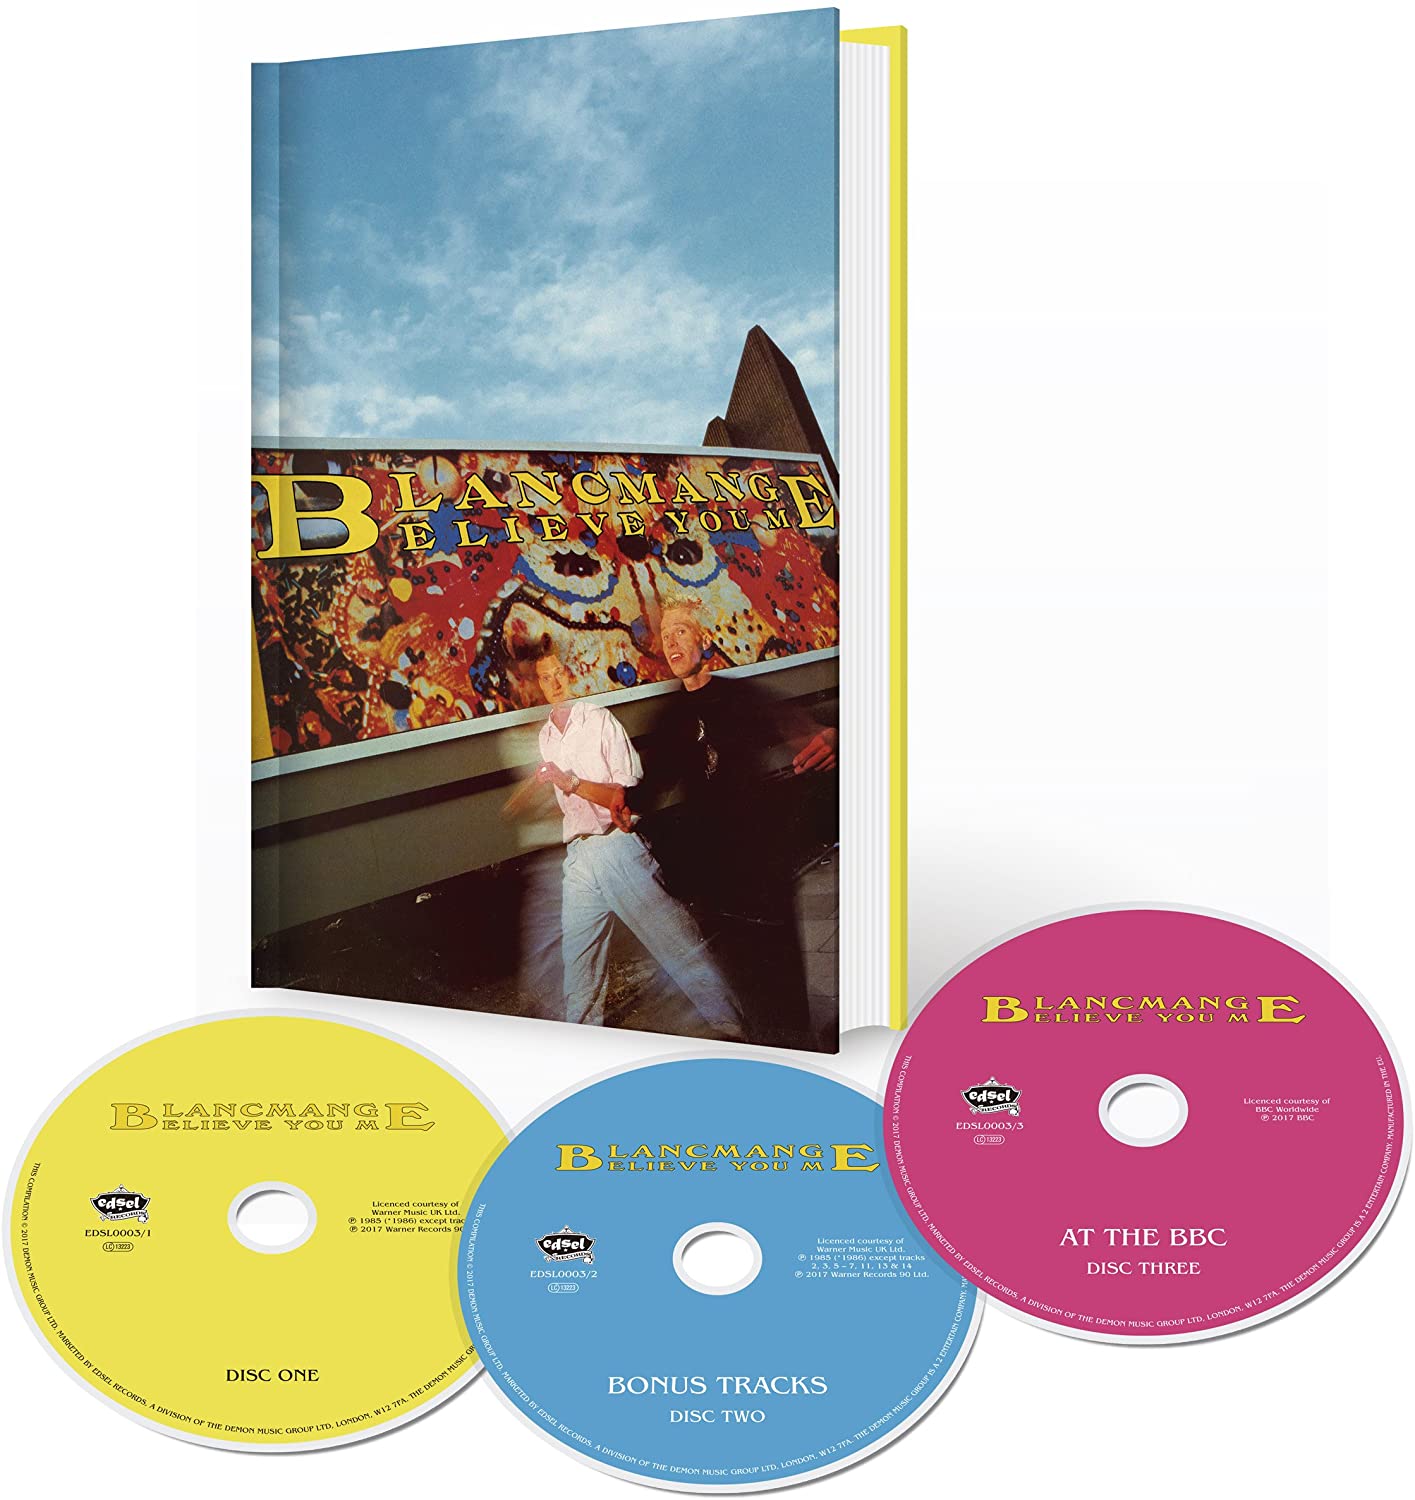 Blancmange ‎– Believe You Me Deluxe - 3CD